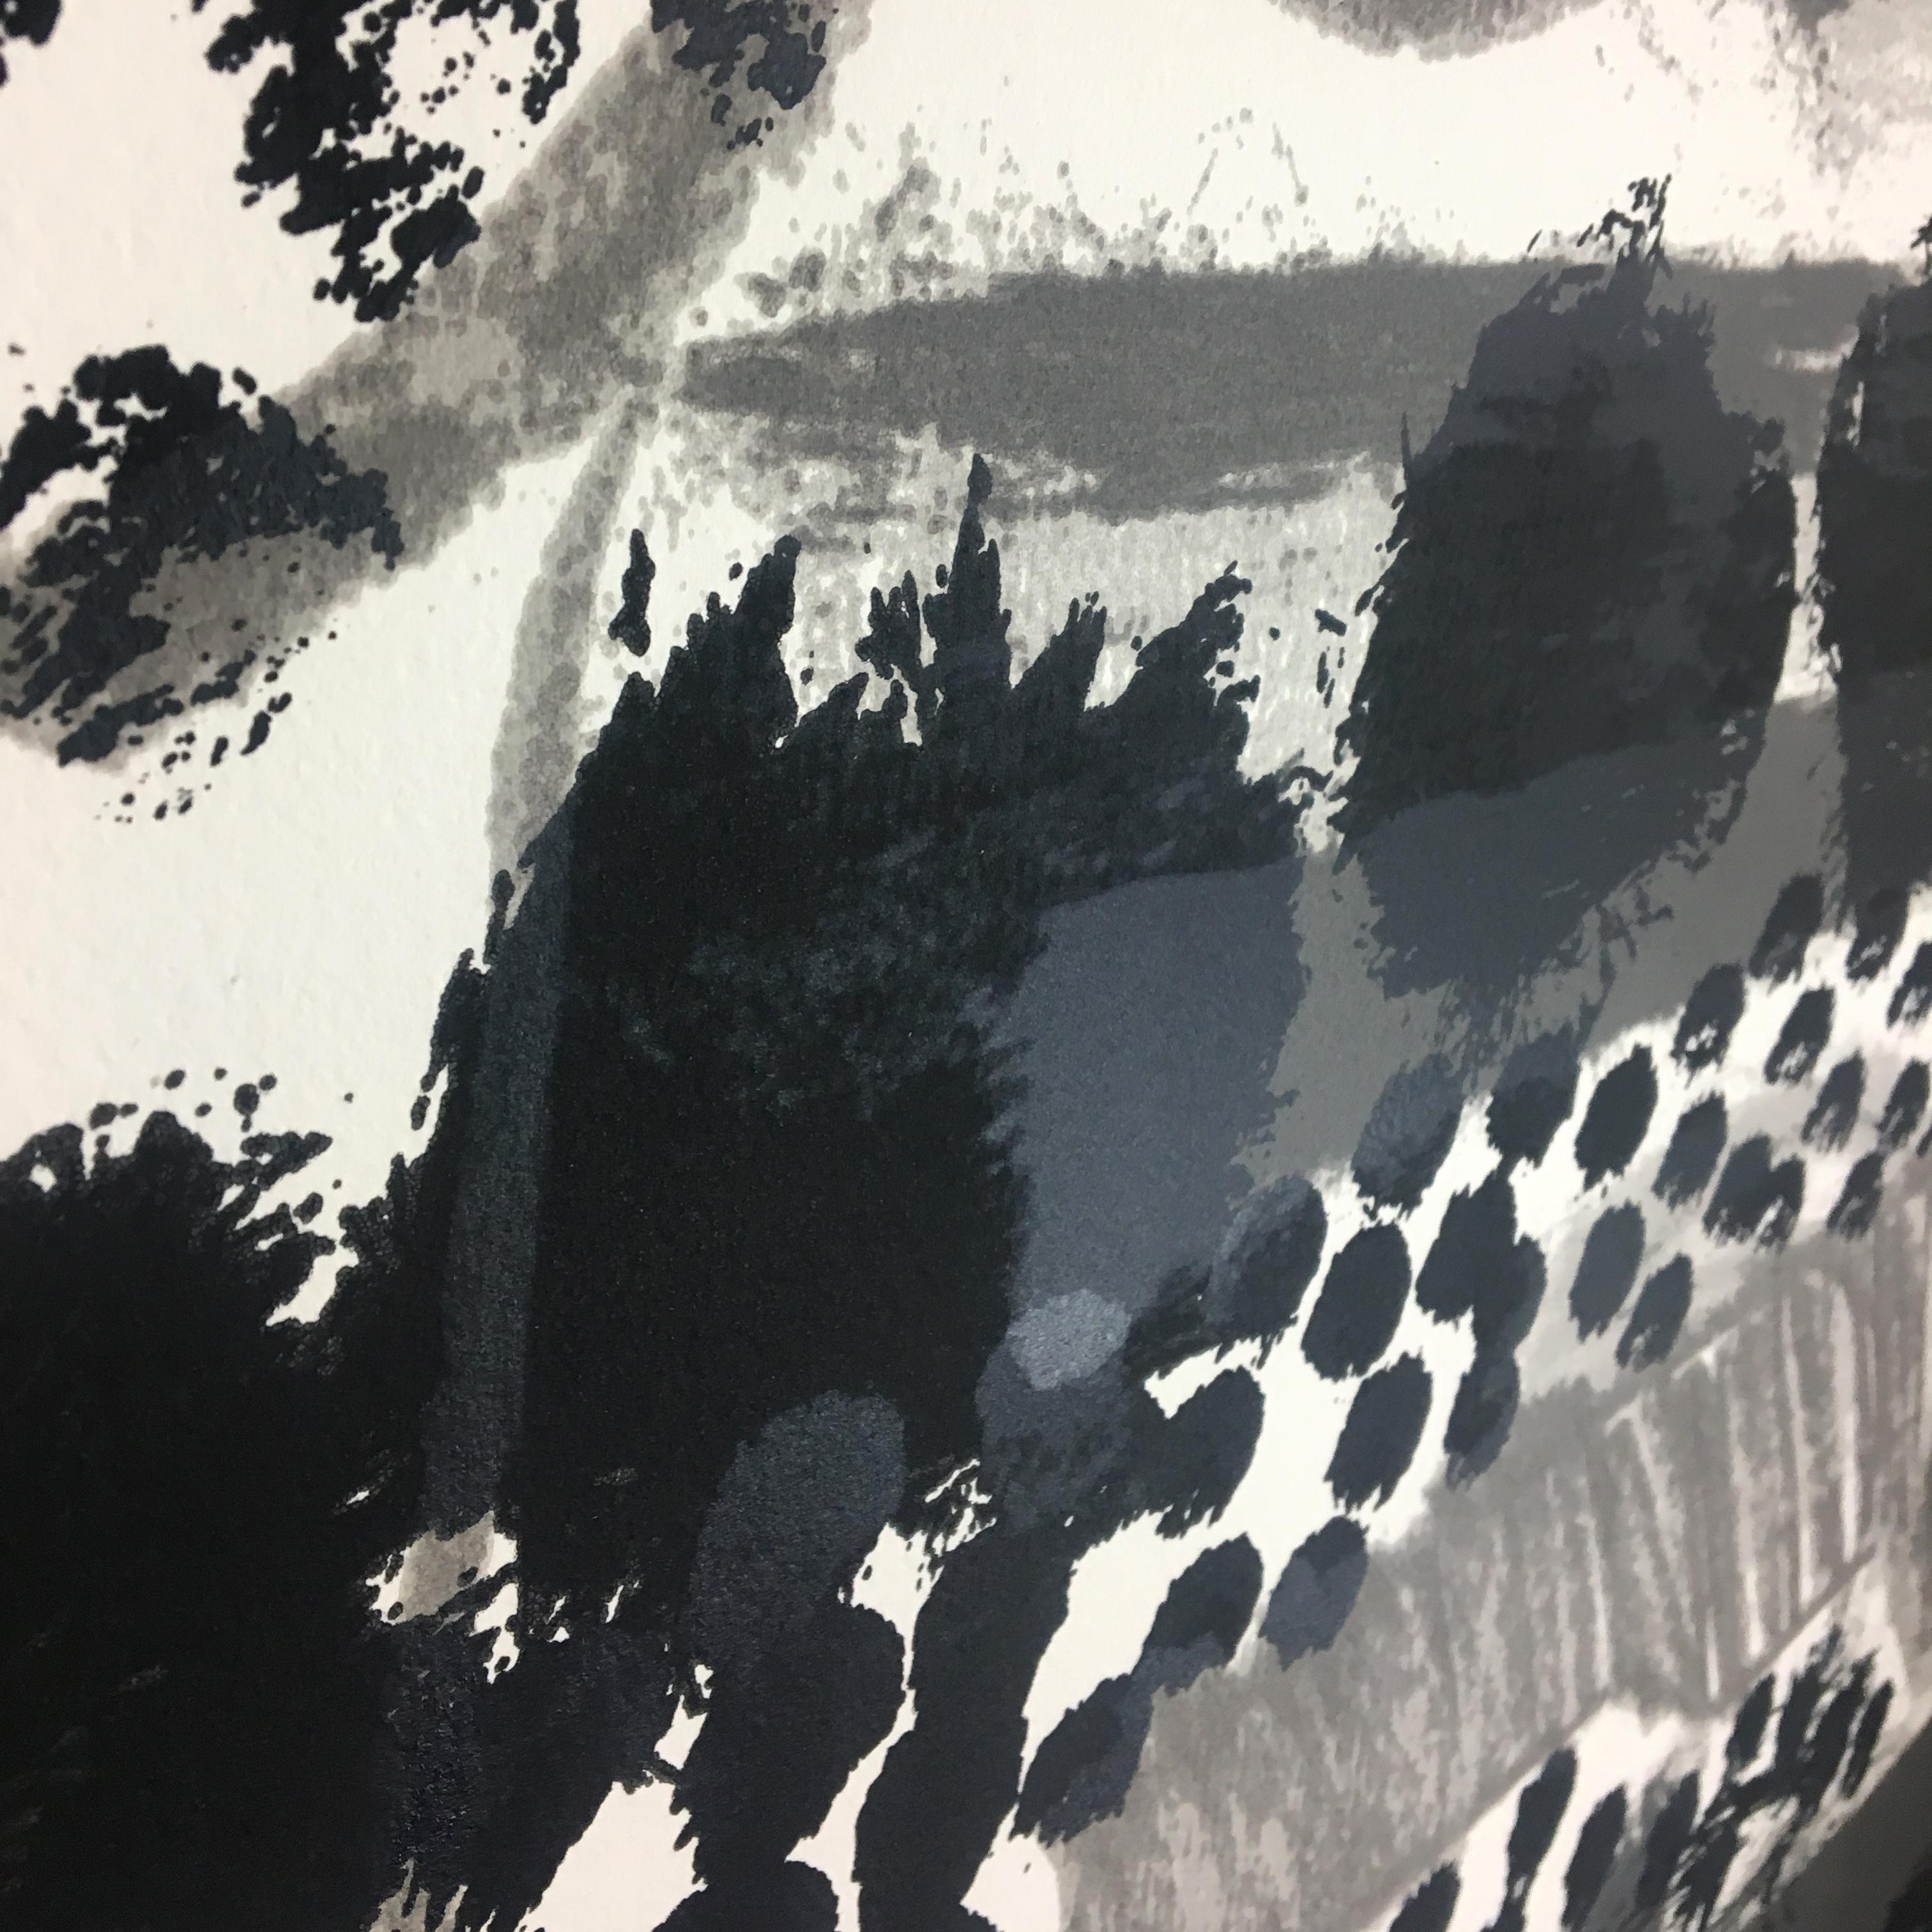 Souvenir, Howard Hodgkin: large scale black white gray abstract interior scene  8